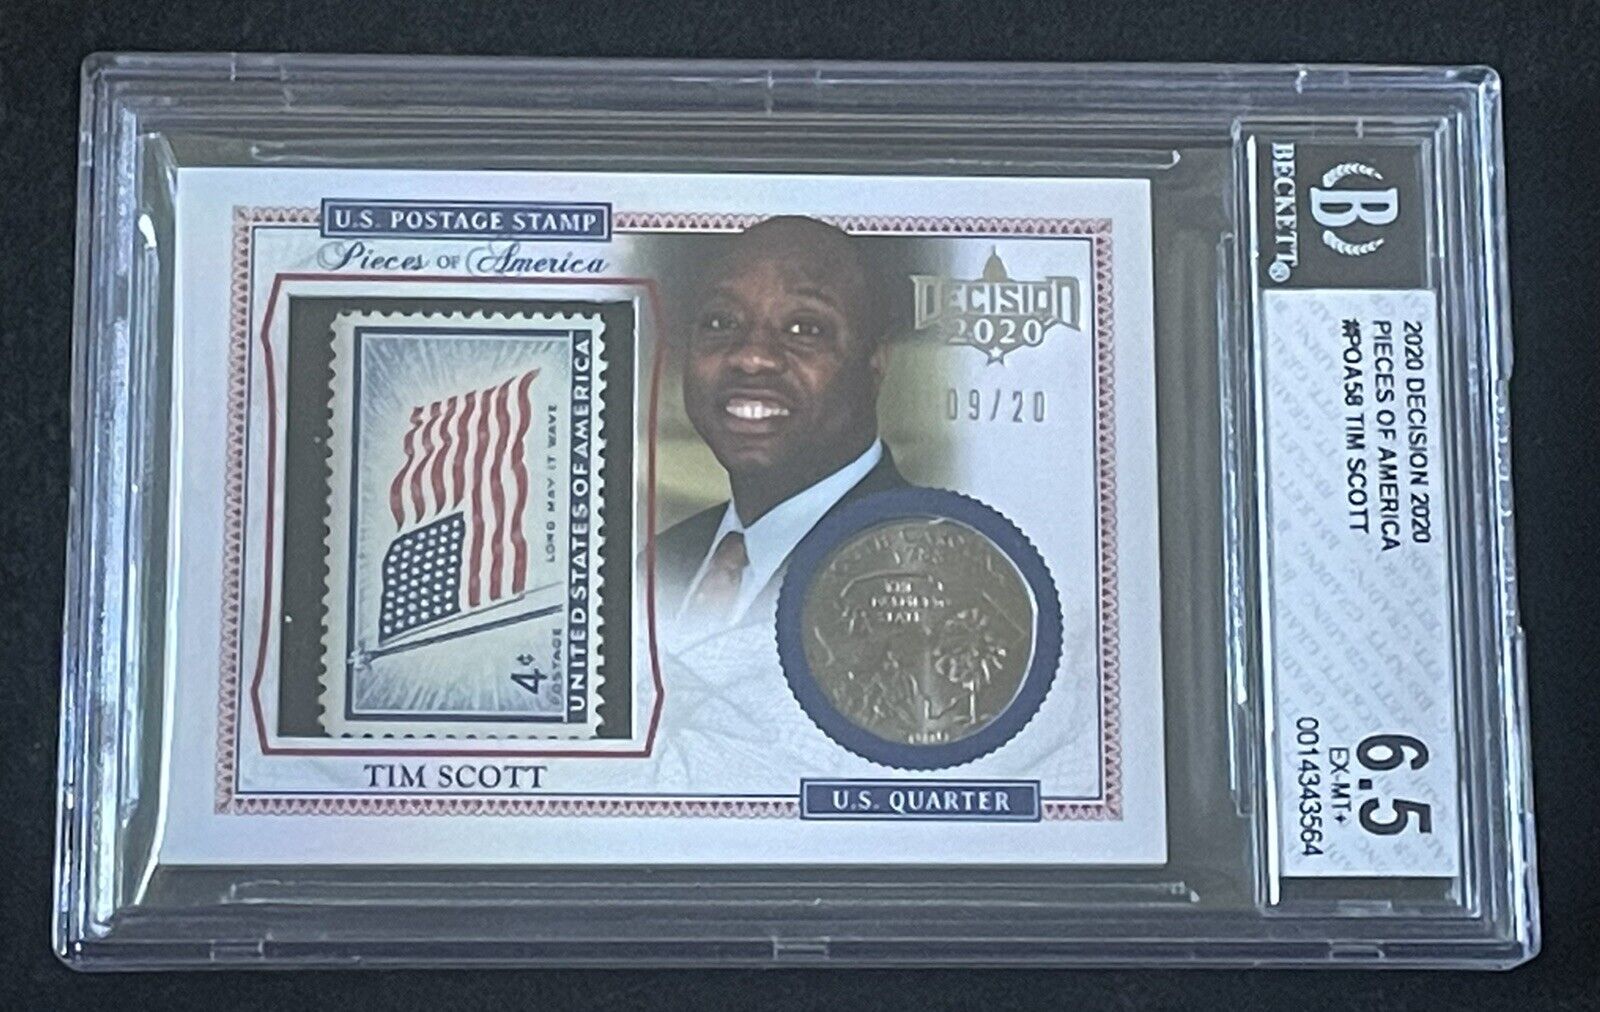 TIM SCOTT RARE 2020 Decision Pieces of AMERICA US FLAG Stamp Graded BGS 6.5